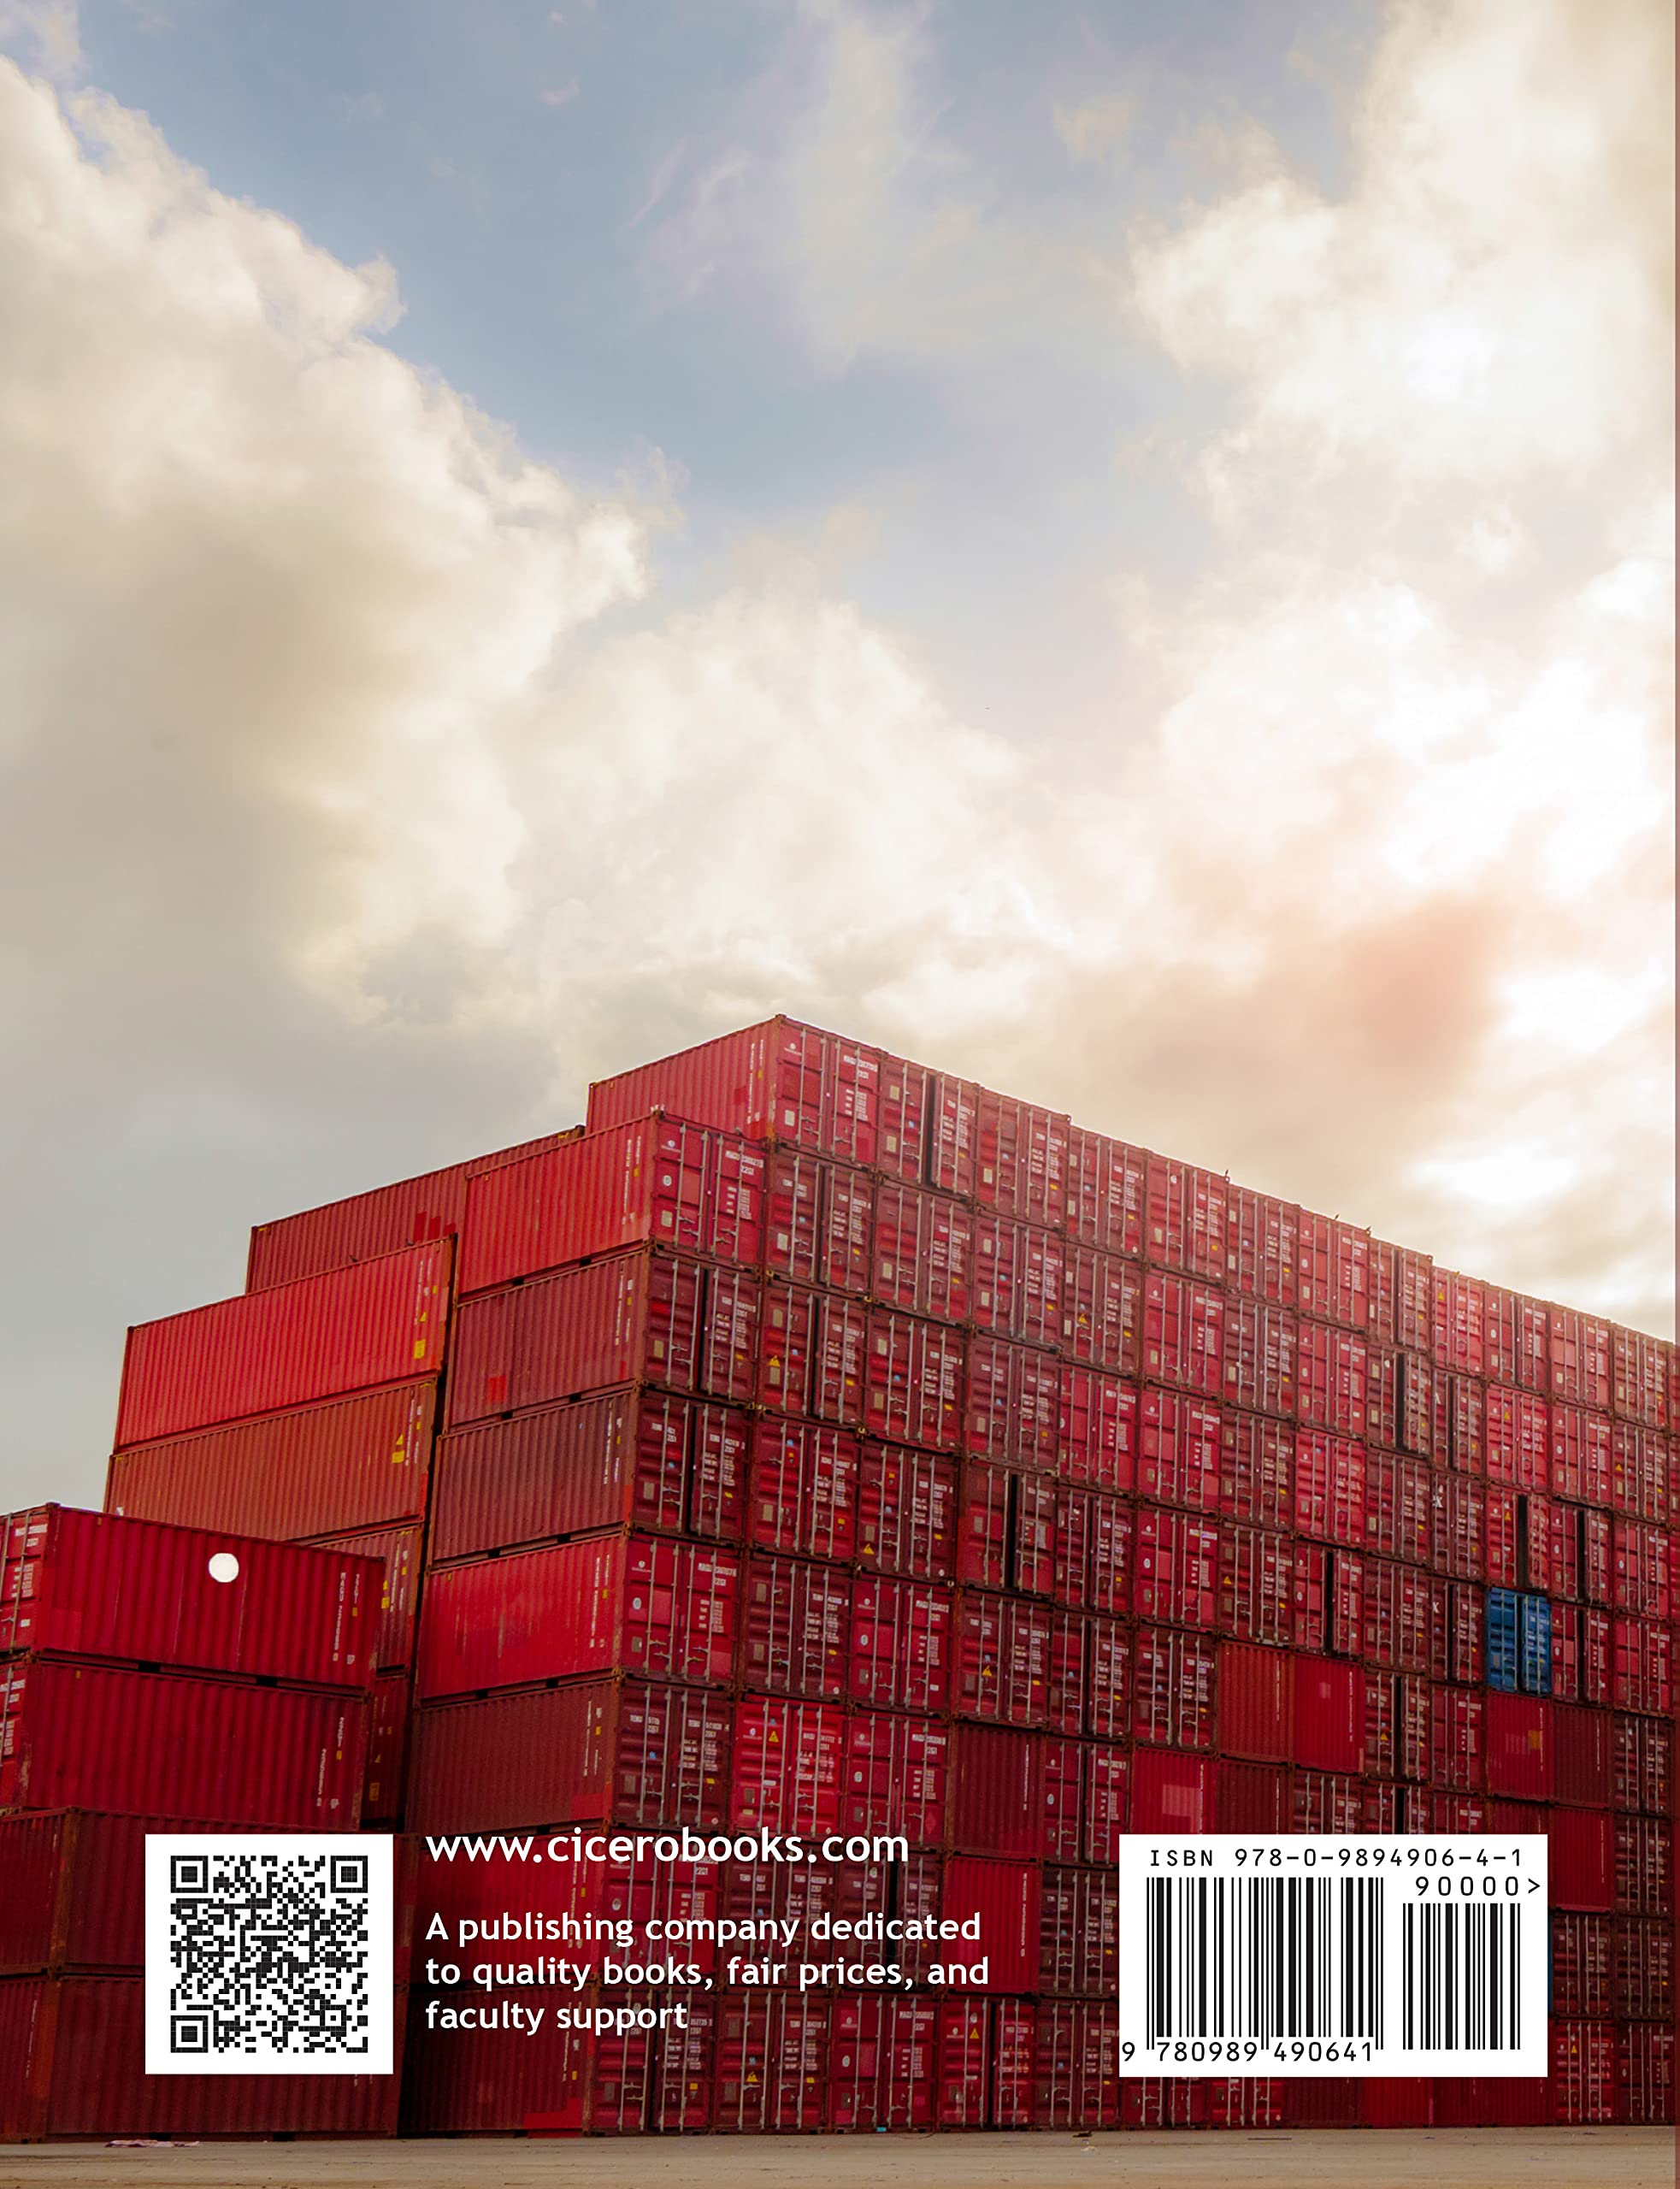 International Logistics: the Management of International Trade Operations